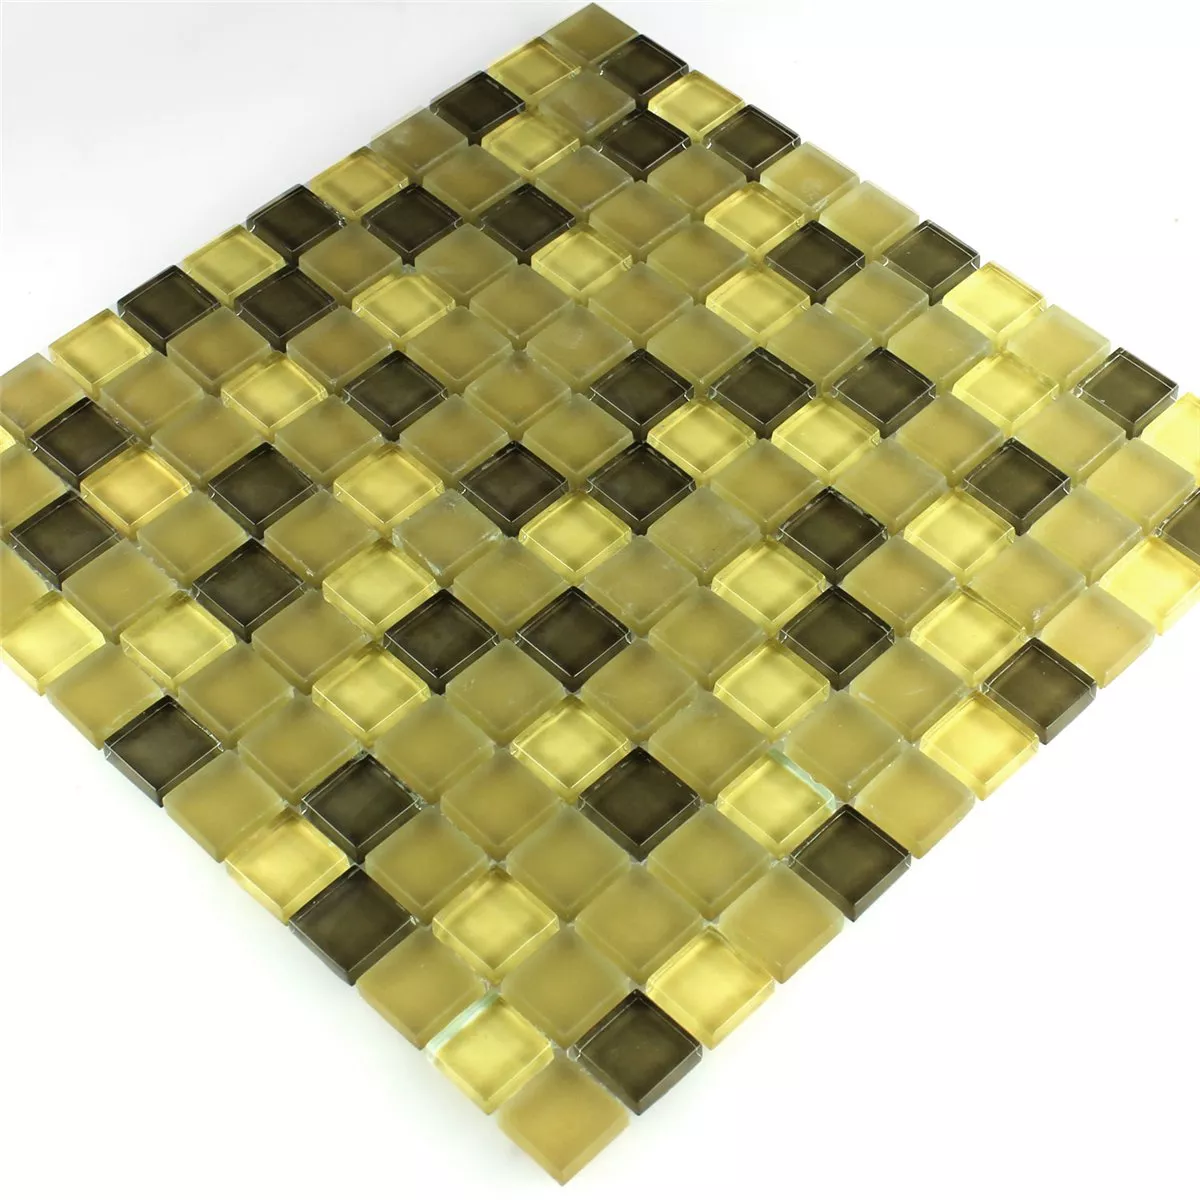 Sample Mosaic Tiles Glass Yellow 